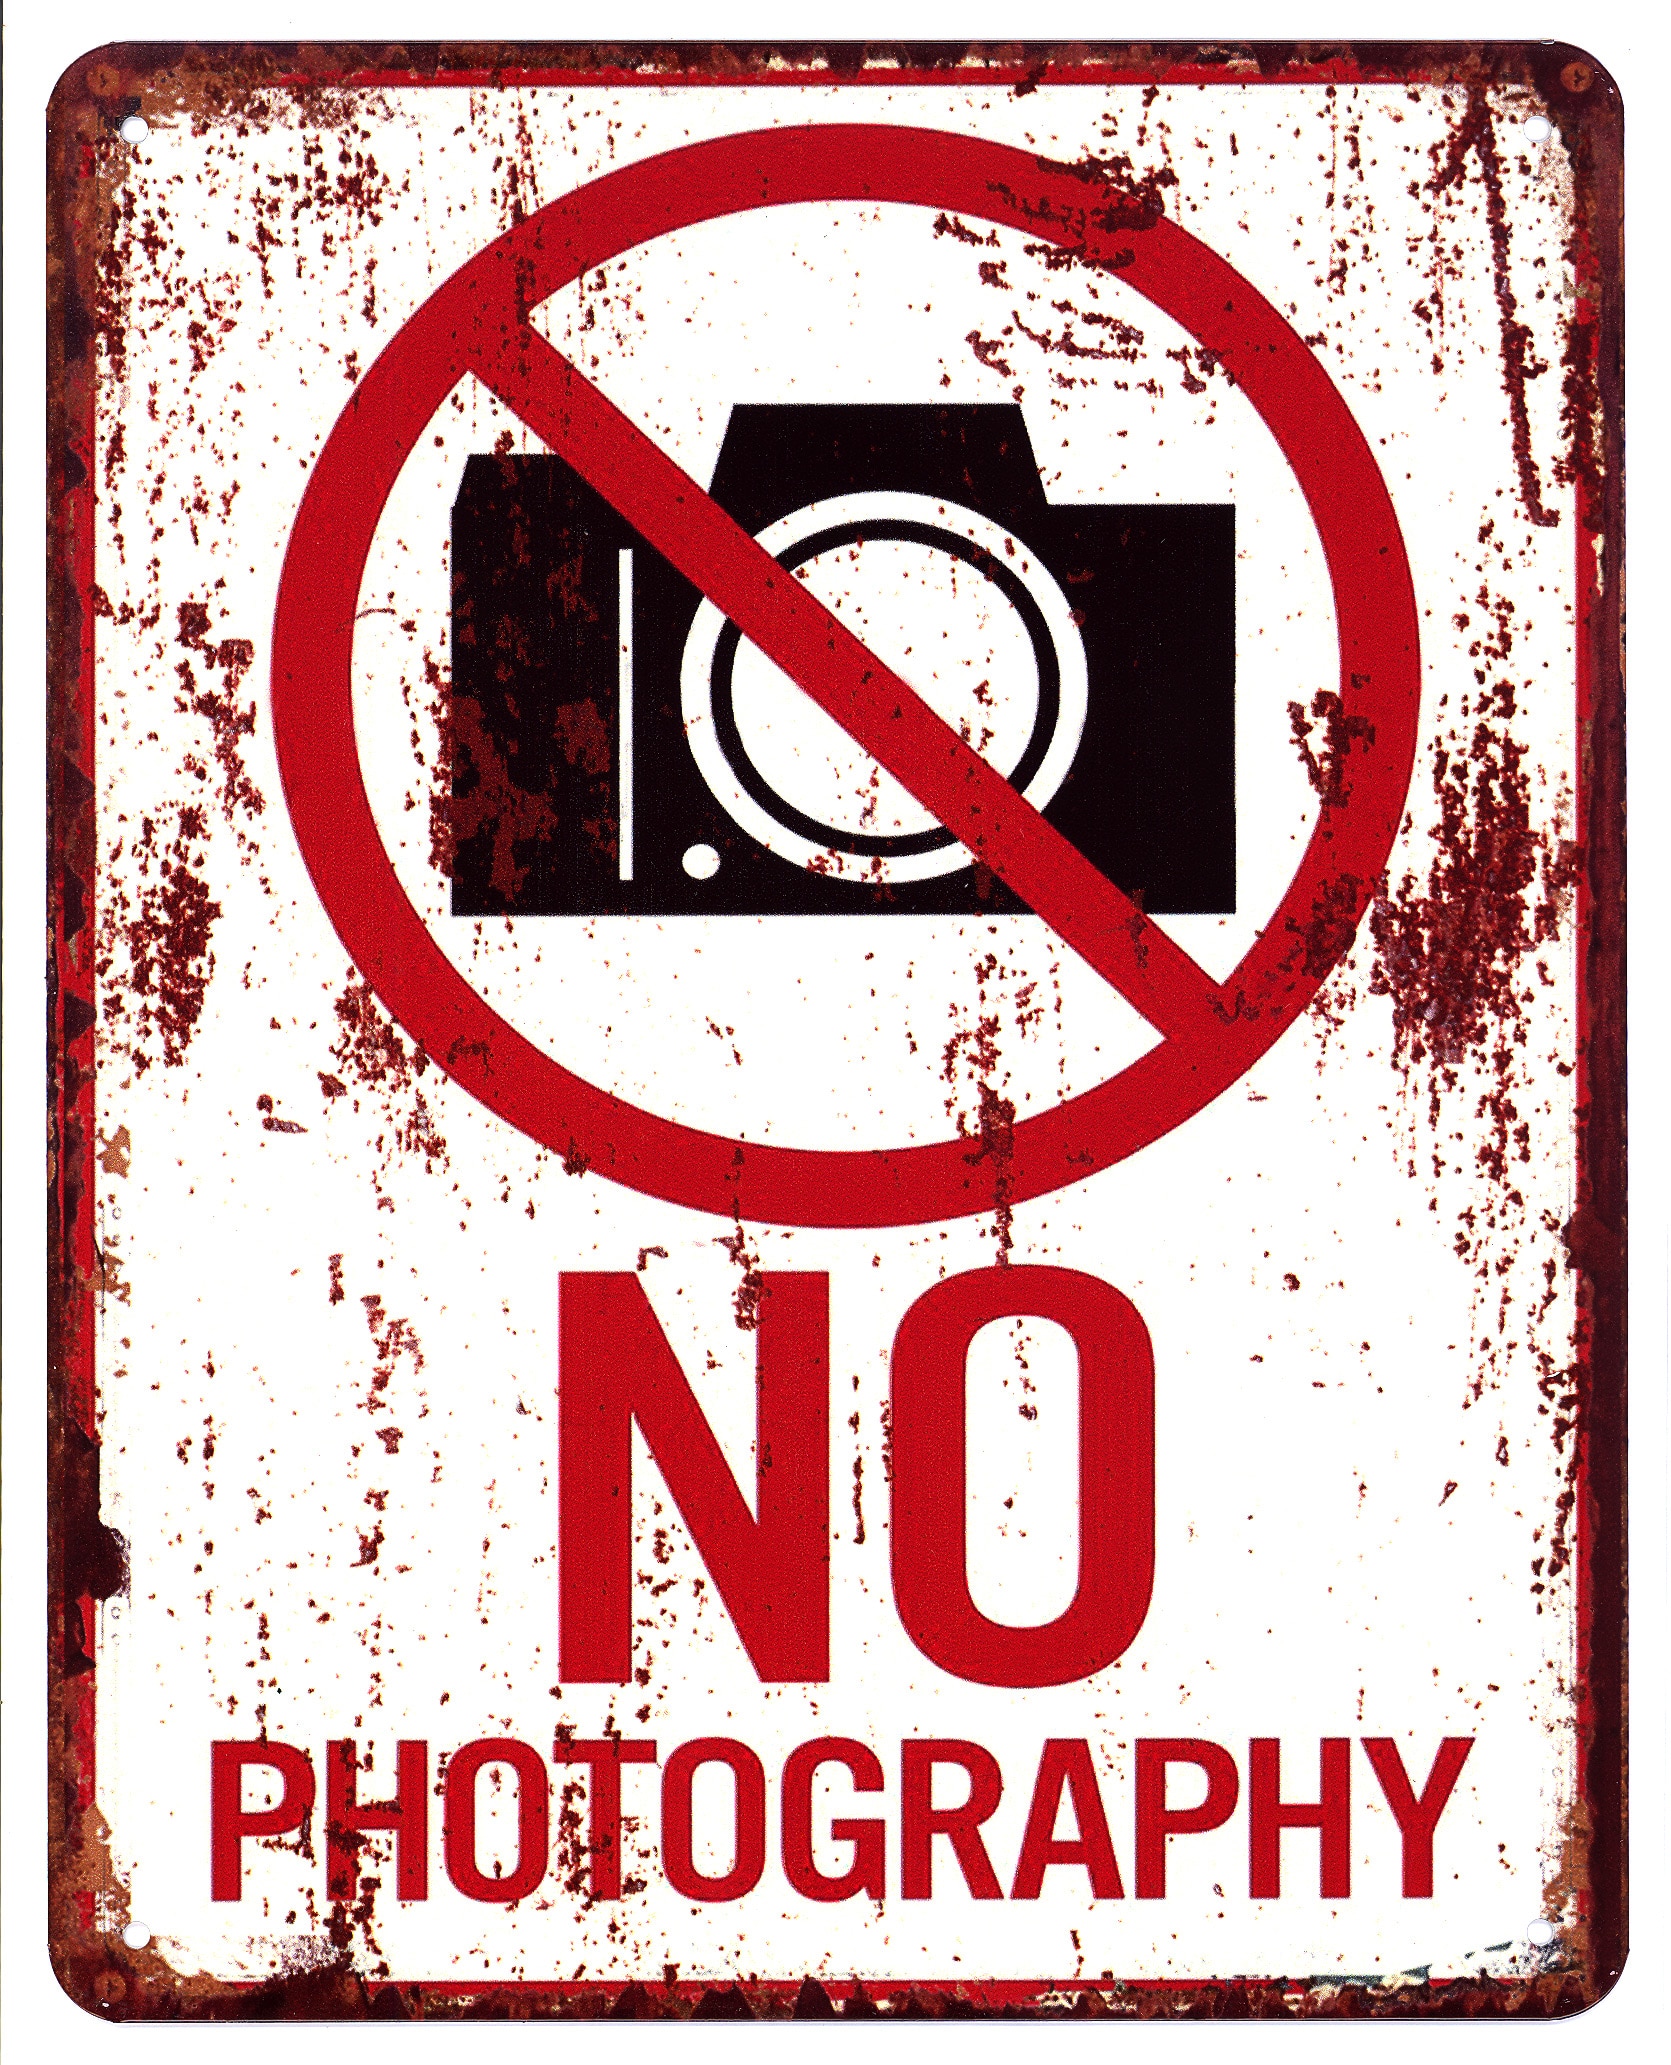 Blechschild "No Photography" Fotografie Foto Kamera Bild Aufnahme 25x20cm Neu